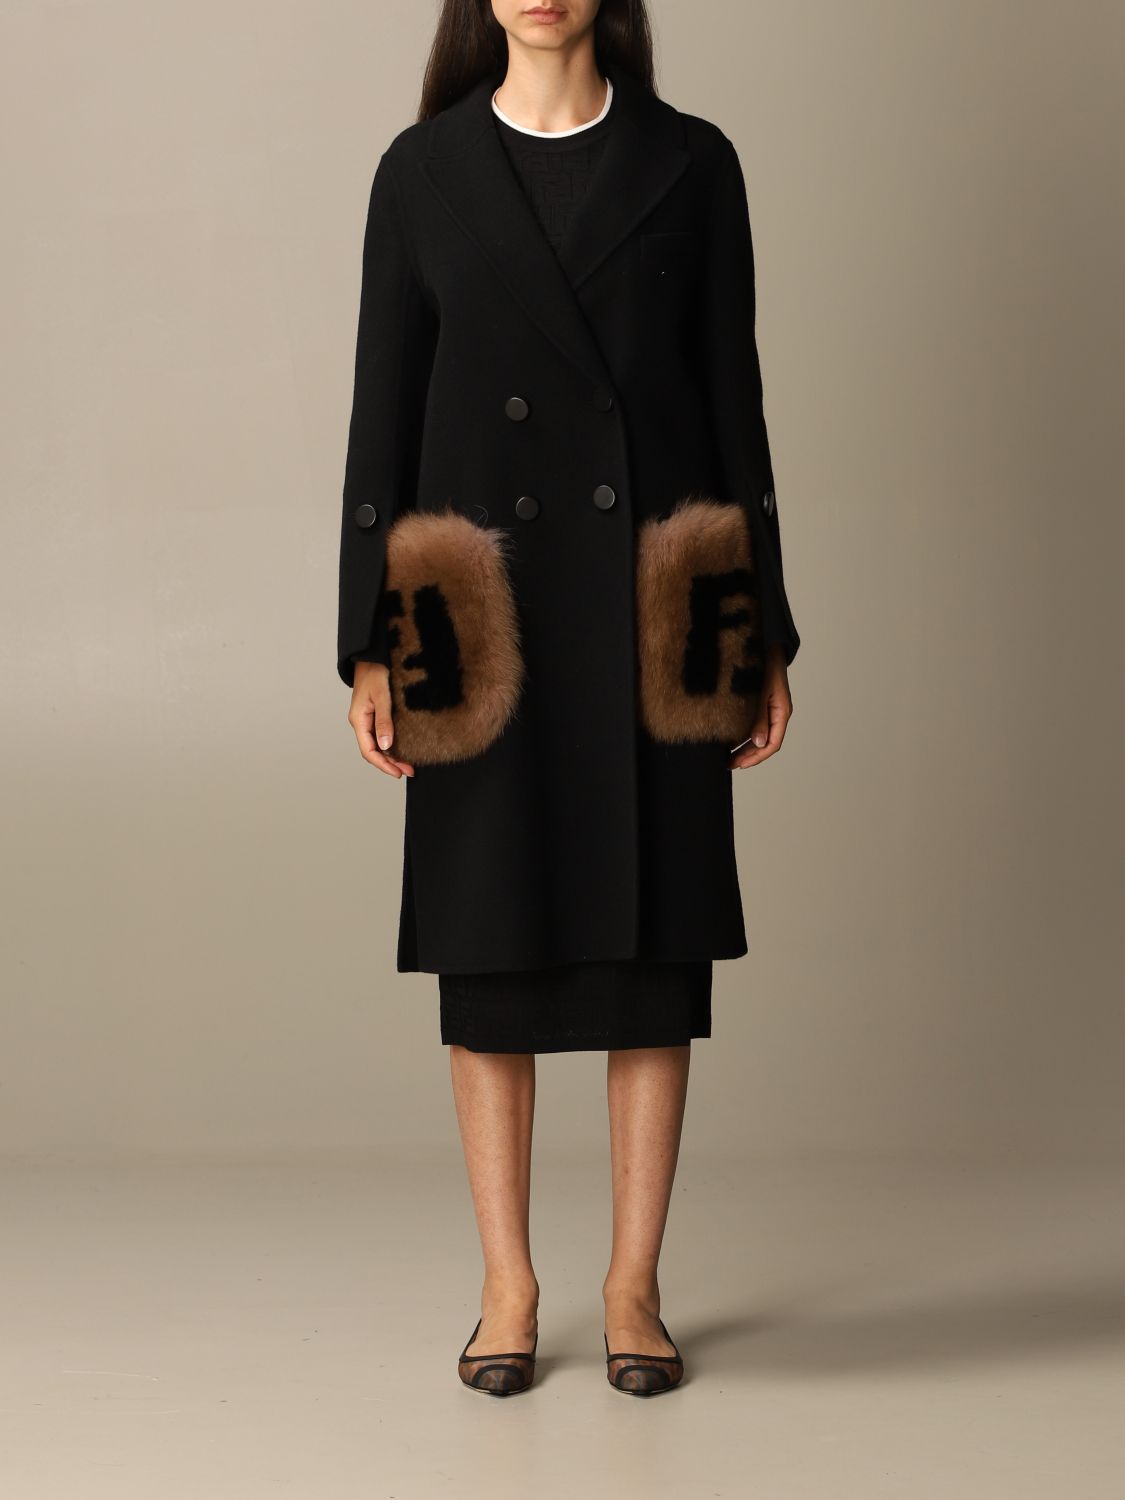 FENDI: coat with fur pockets and FF logo | Coat Fendi Women Black